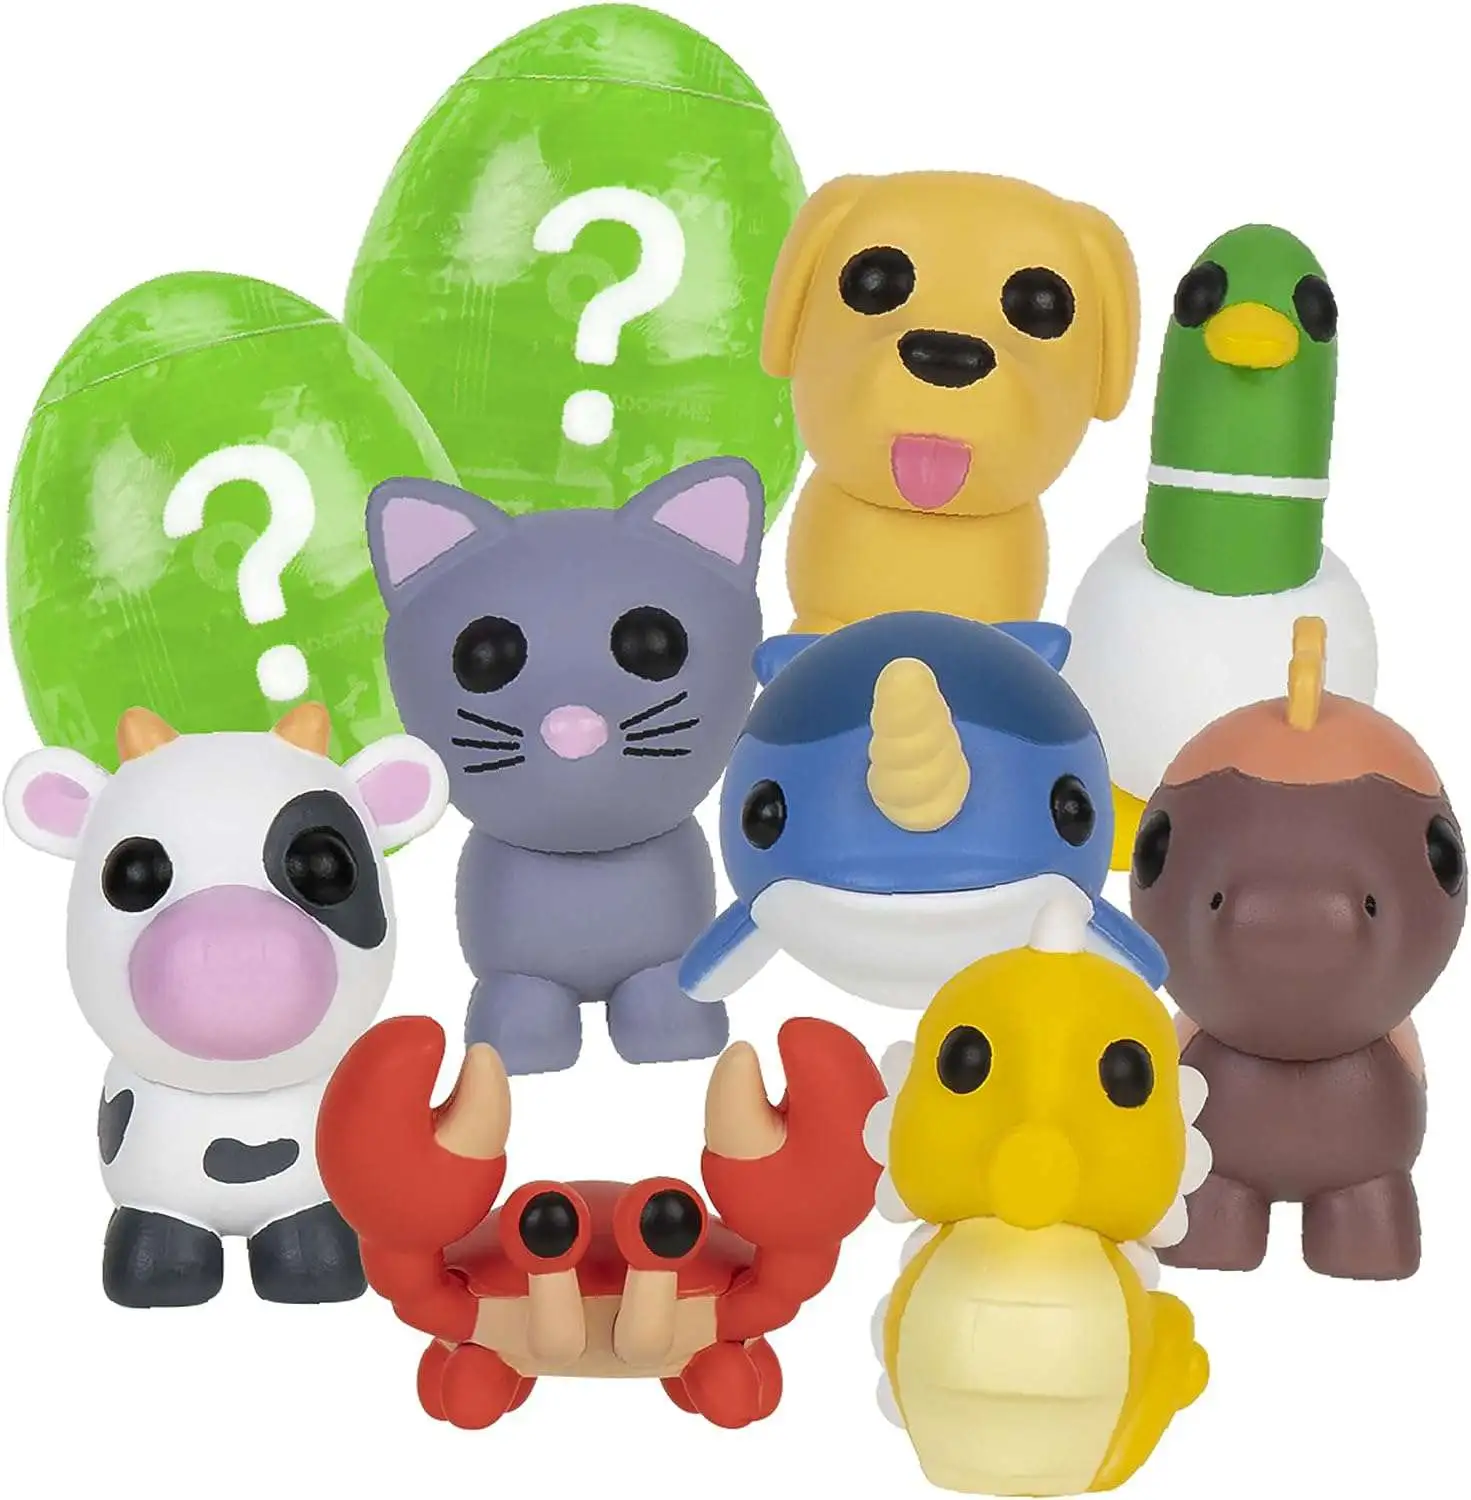 Adopt Me Pet Fantasy Clan Mini Figure 6-Pack Jazwares - ToyWiz